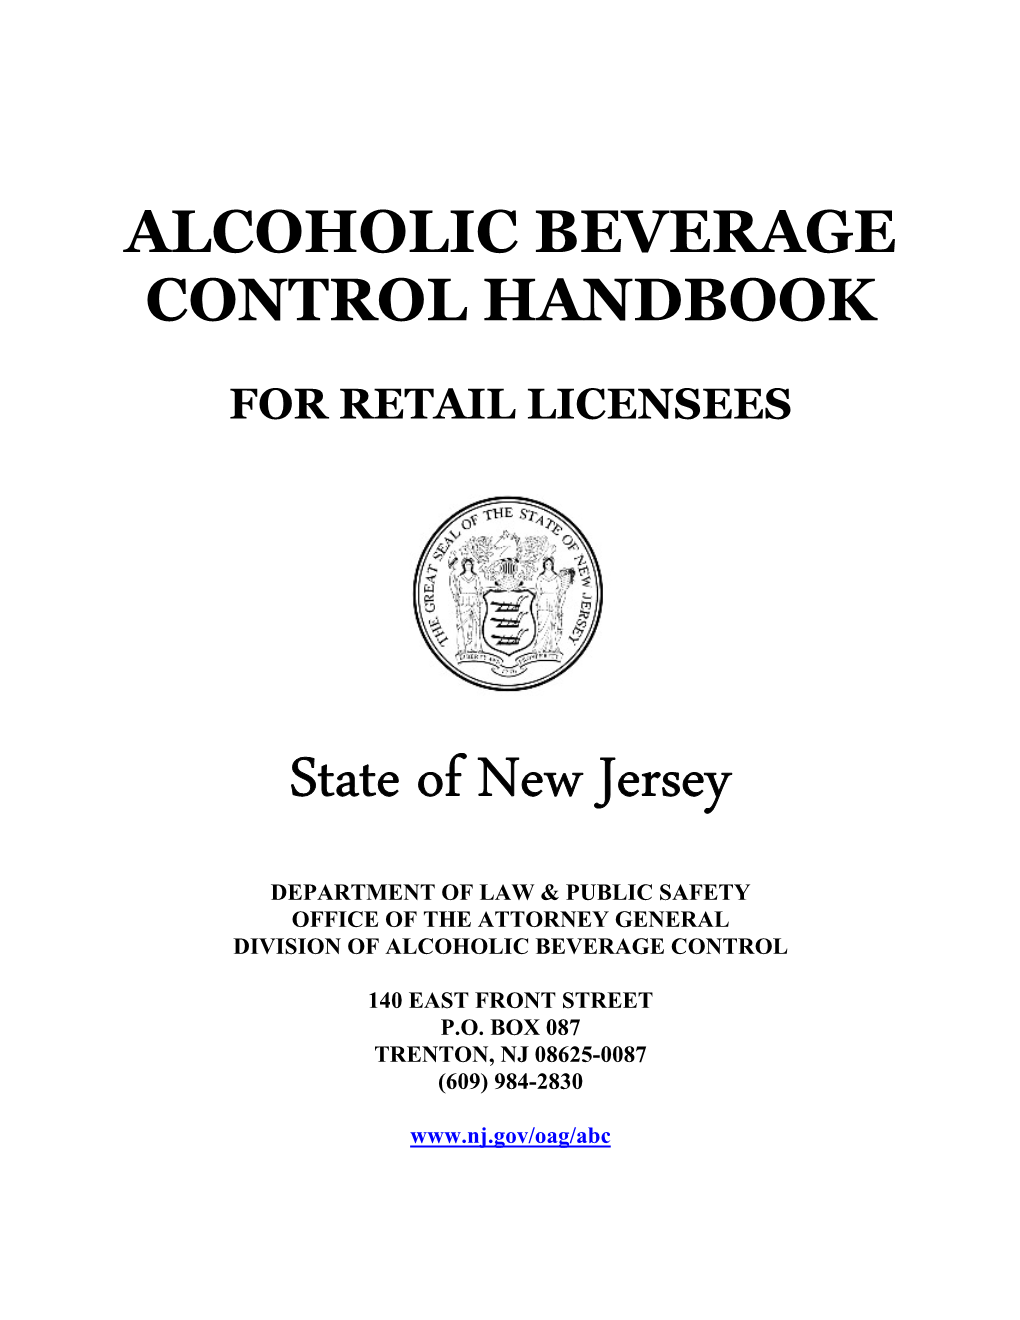 The New Jersey Alcoholic Beverage Control Handbook